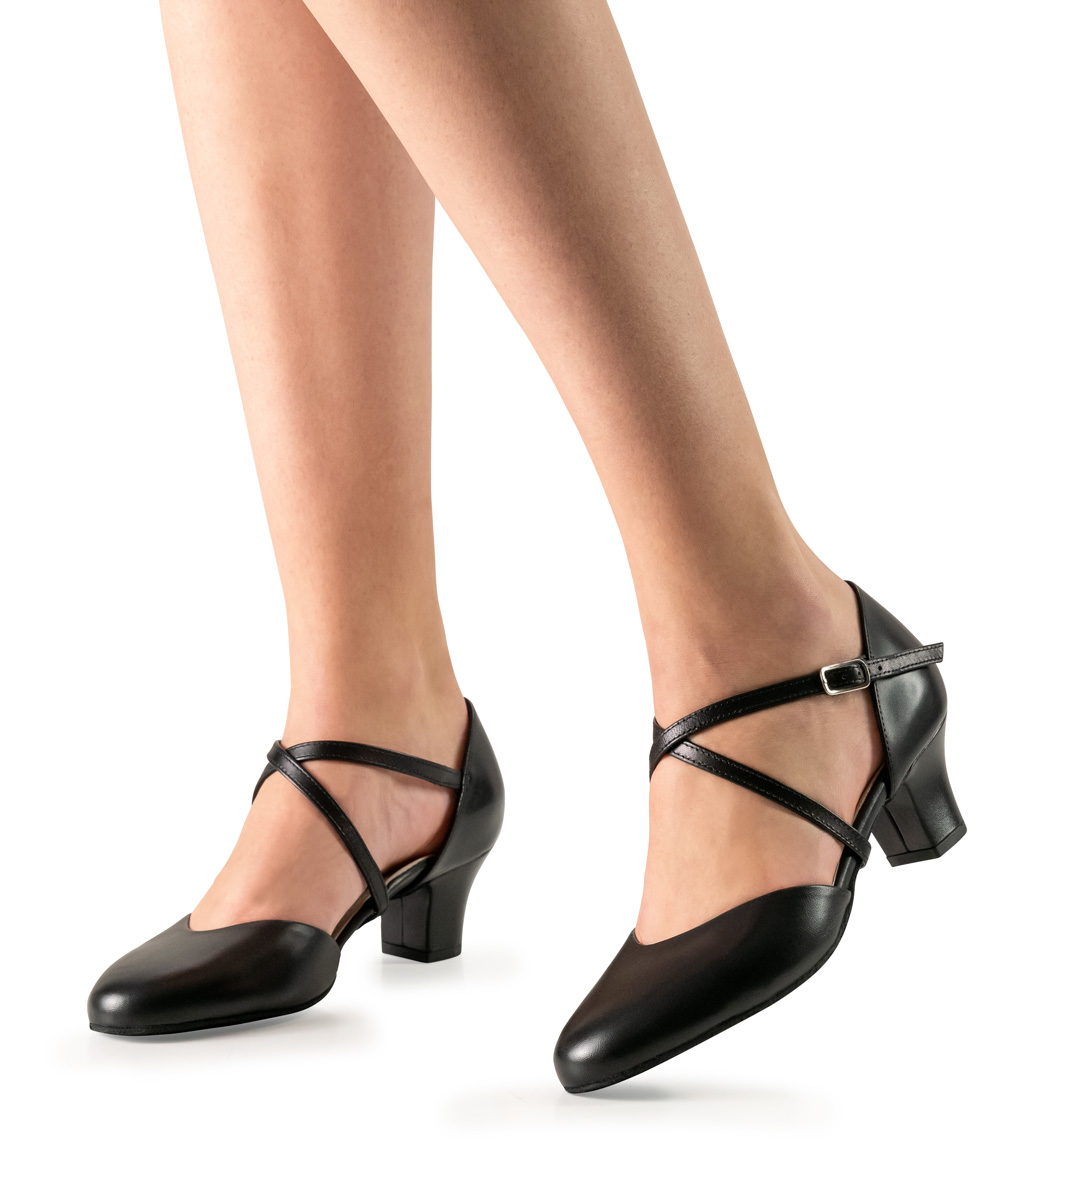 comfortable Werner Kern ladies' dance shoe with a 4.5 cm heel